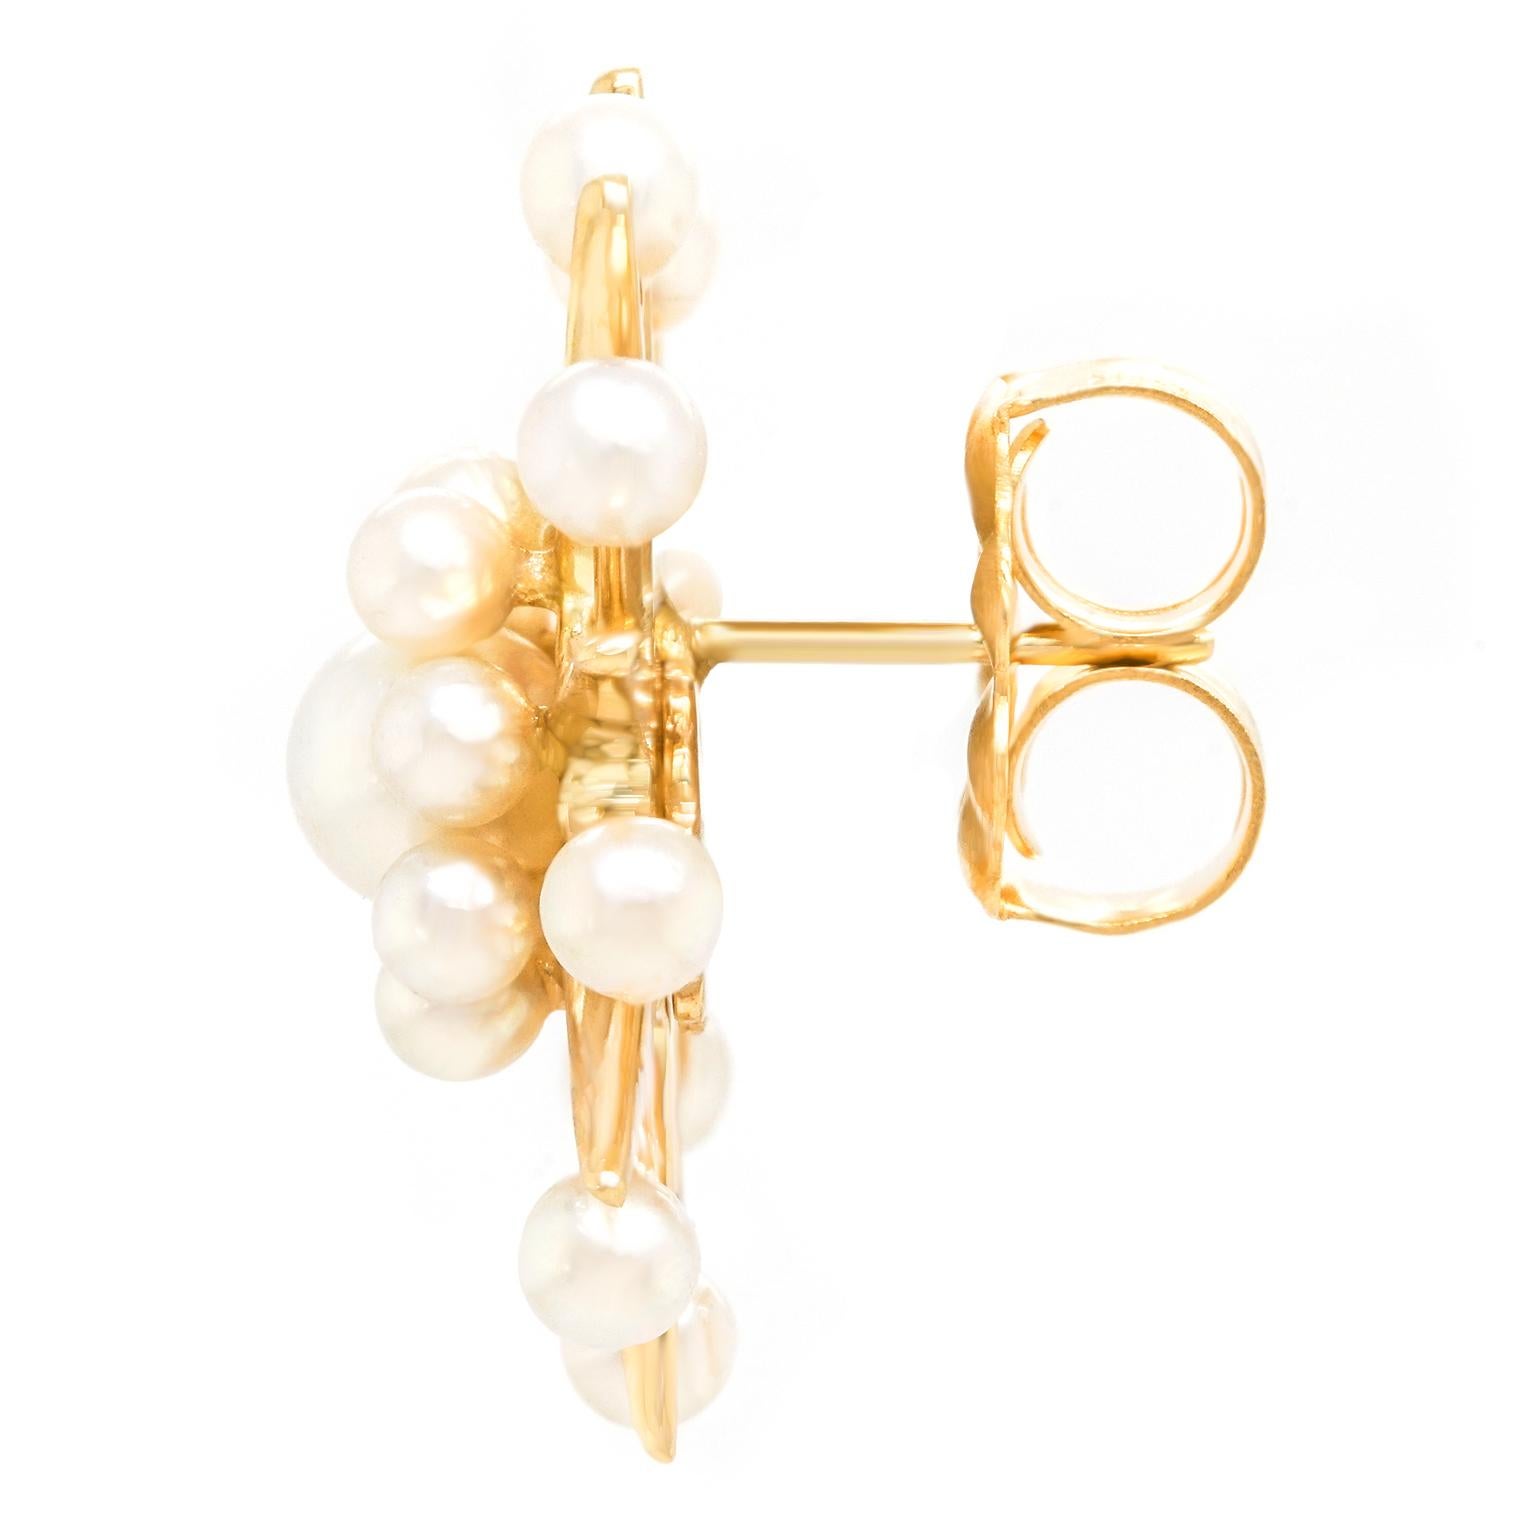 Fischer & Co. Sixties Pop Art Atomic Style Pearl-Set Gold Earrings 2